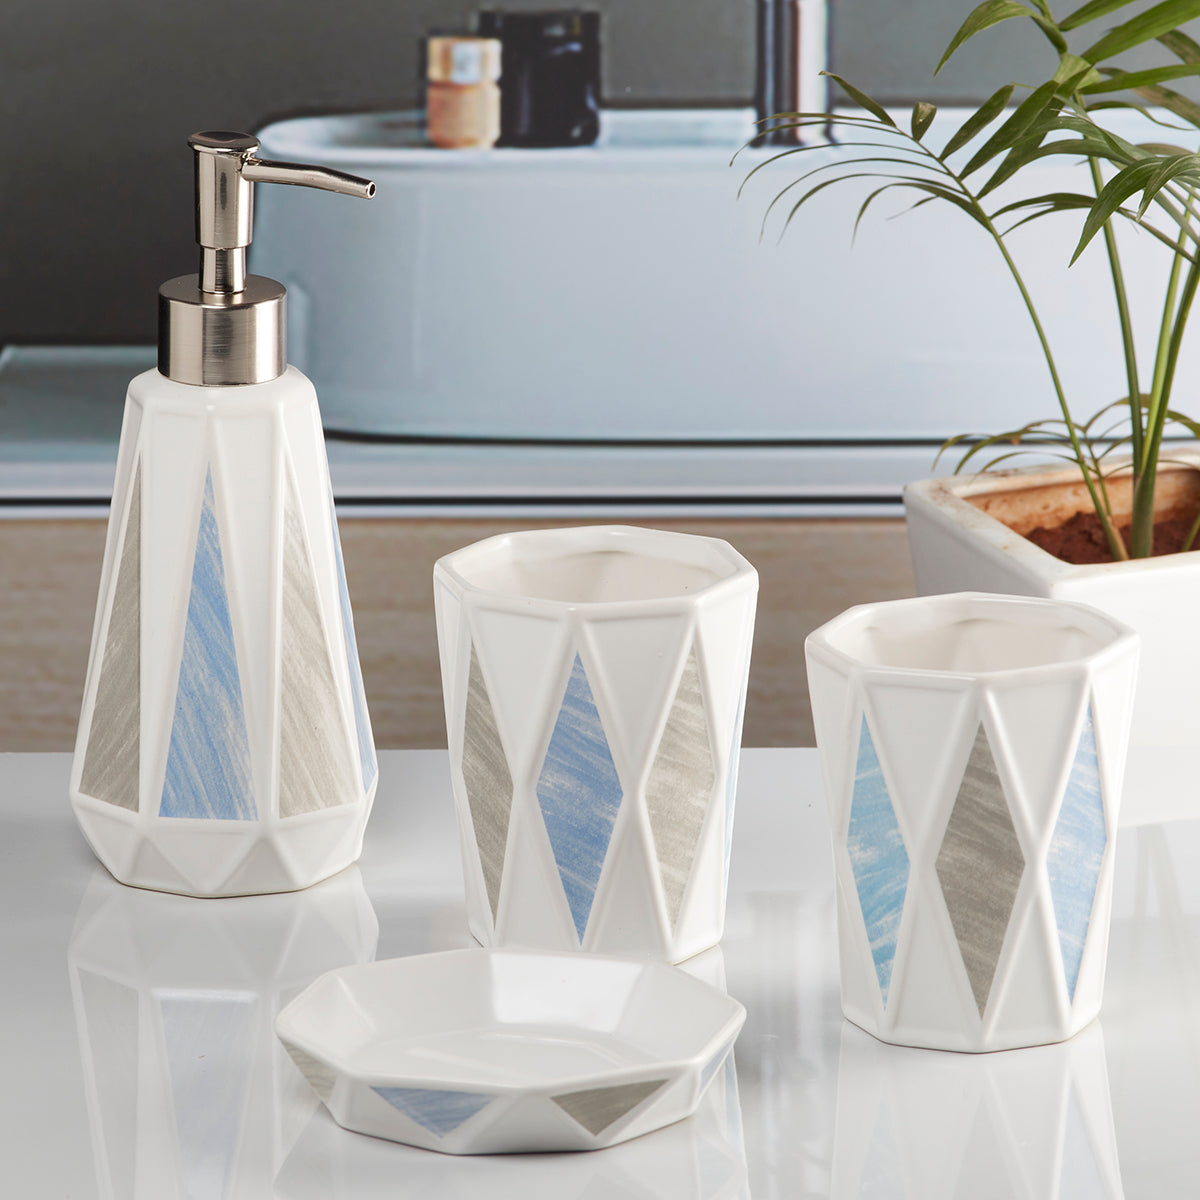 Ceramic Bathroom Accessories Set of 4 Bath Set with Soap Dispenser (10085)